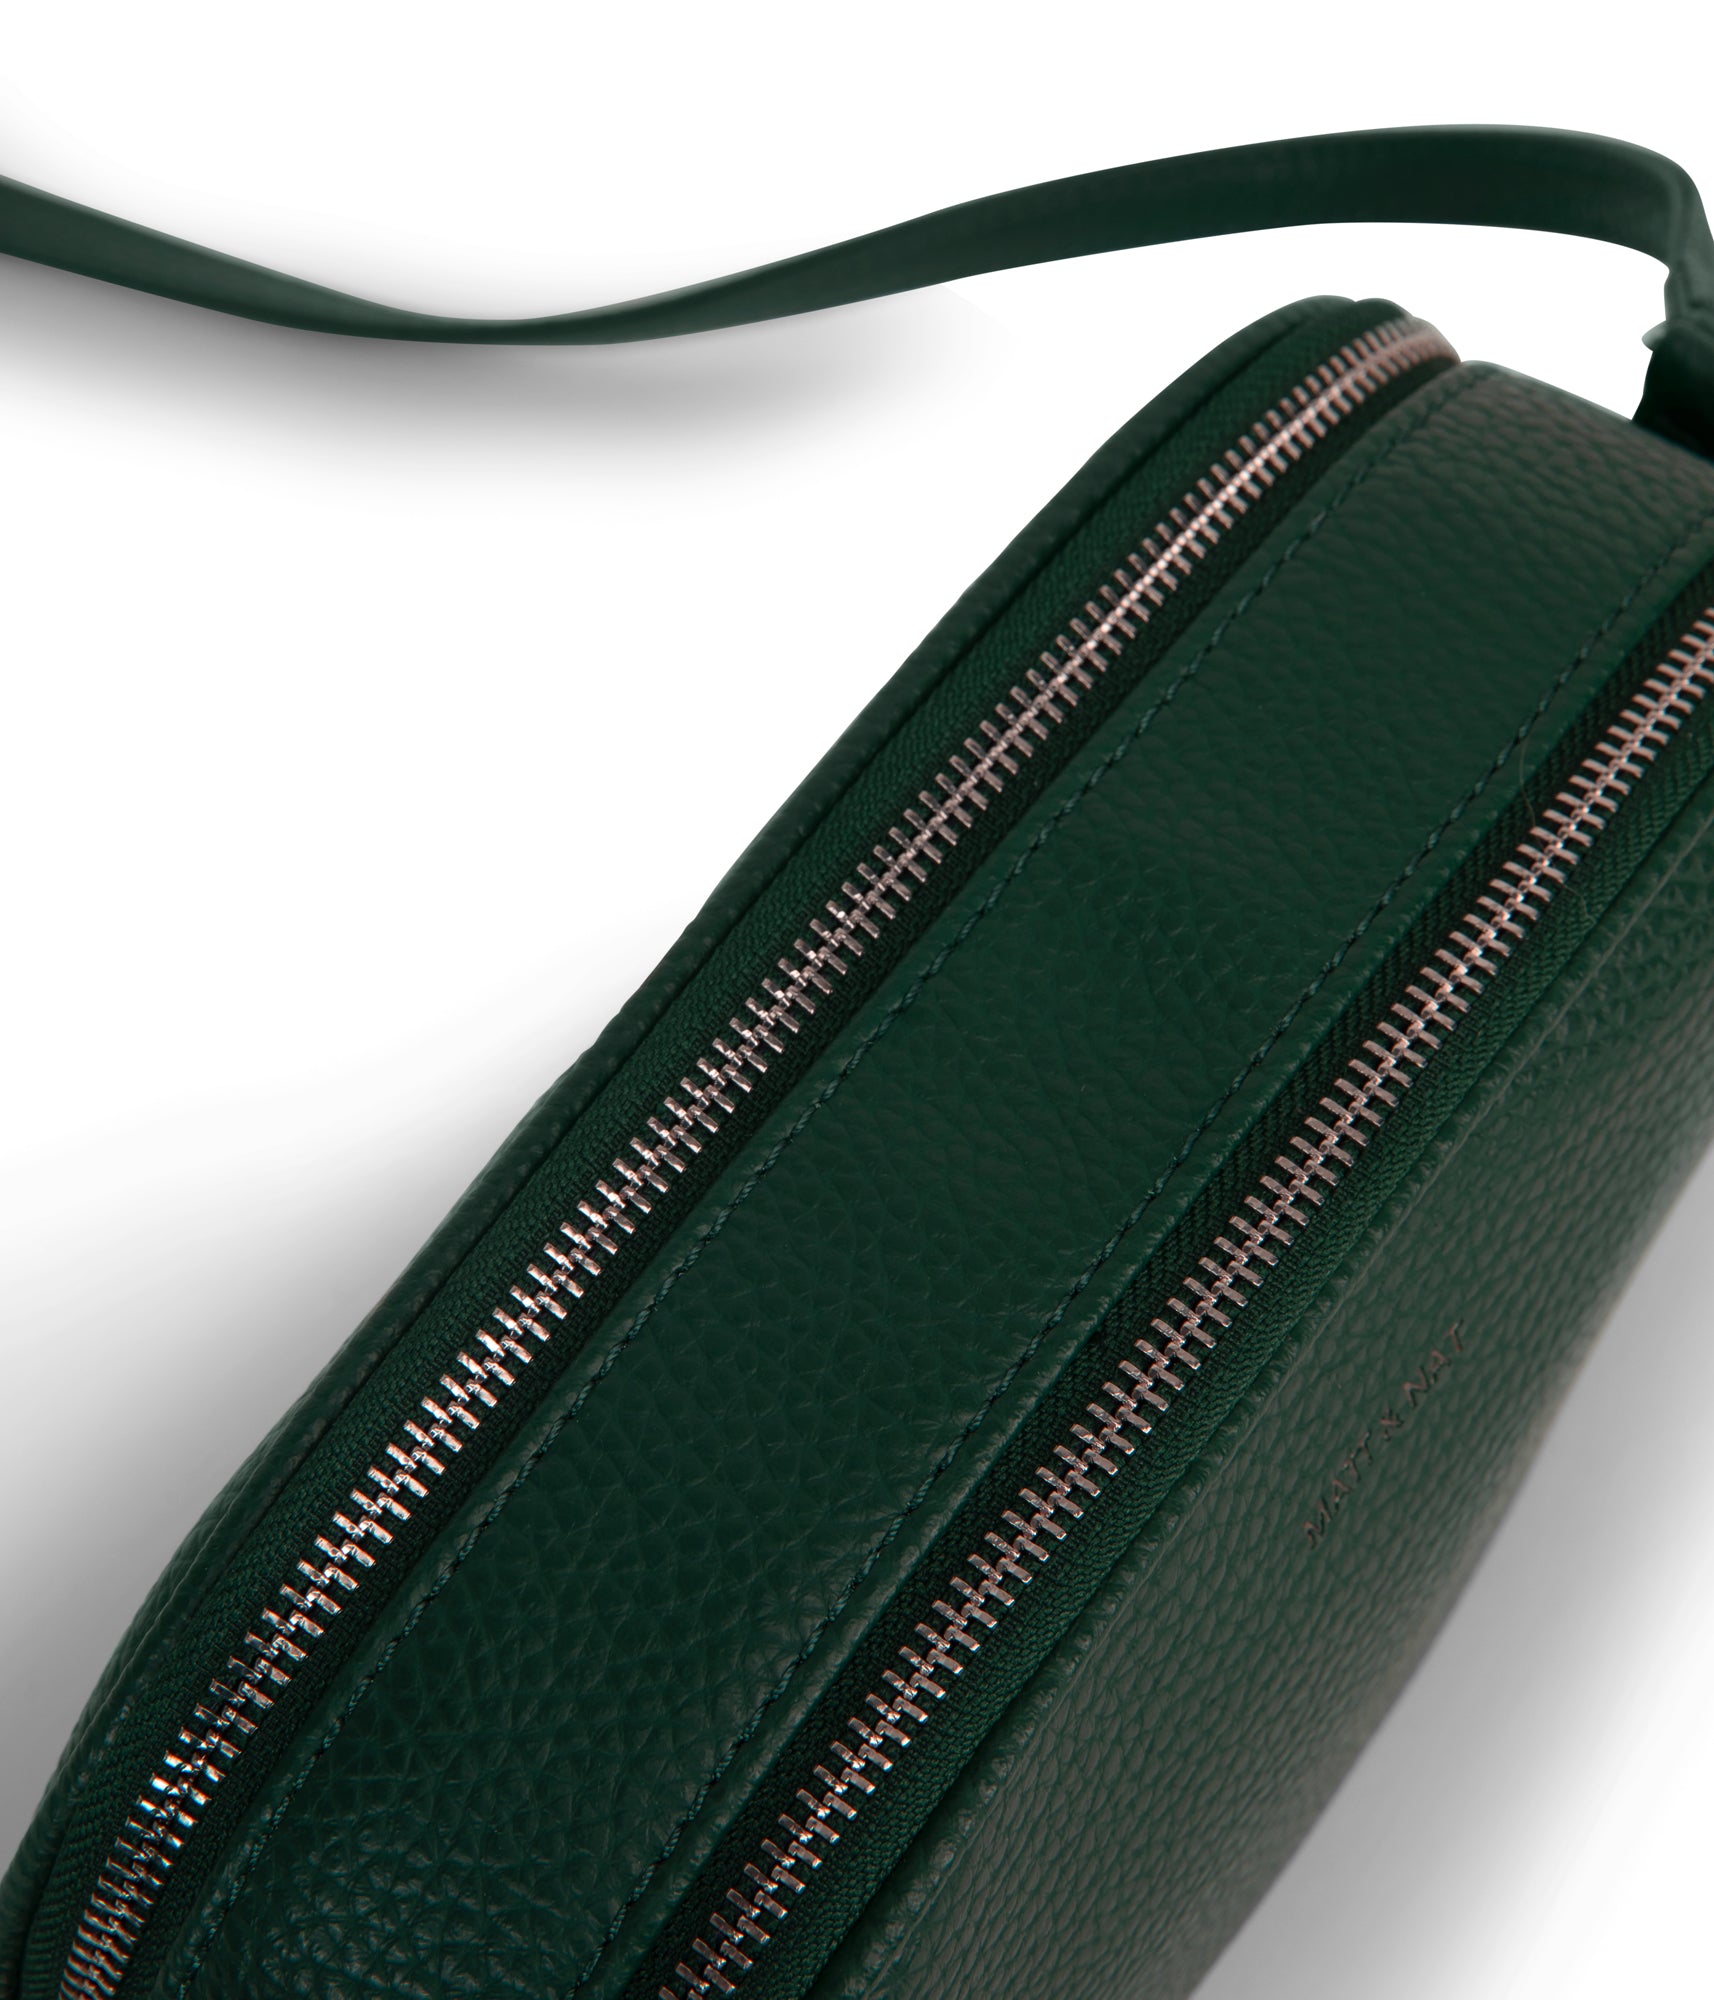 PAIR Vegan Crossbody Bag - Purity | Color: Green - variant::empress